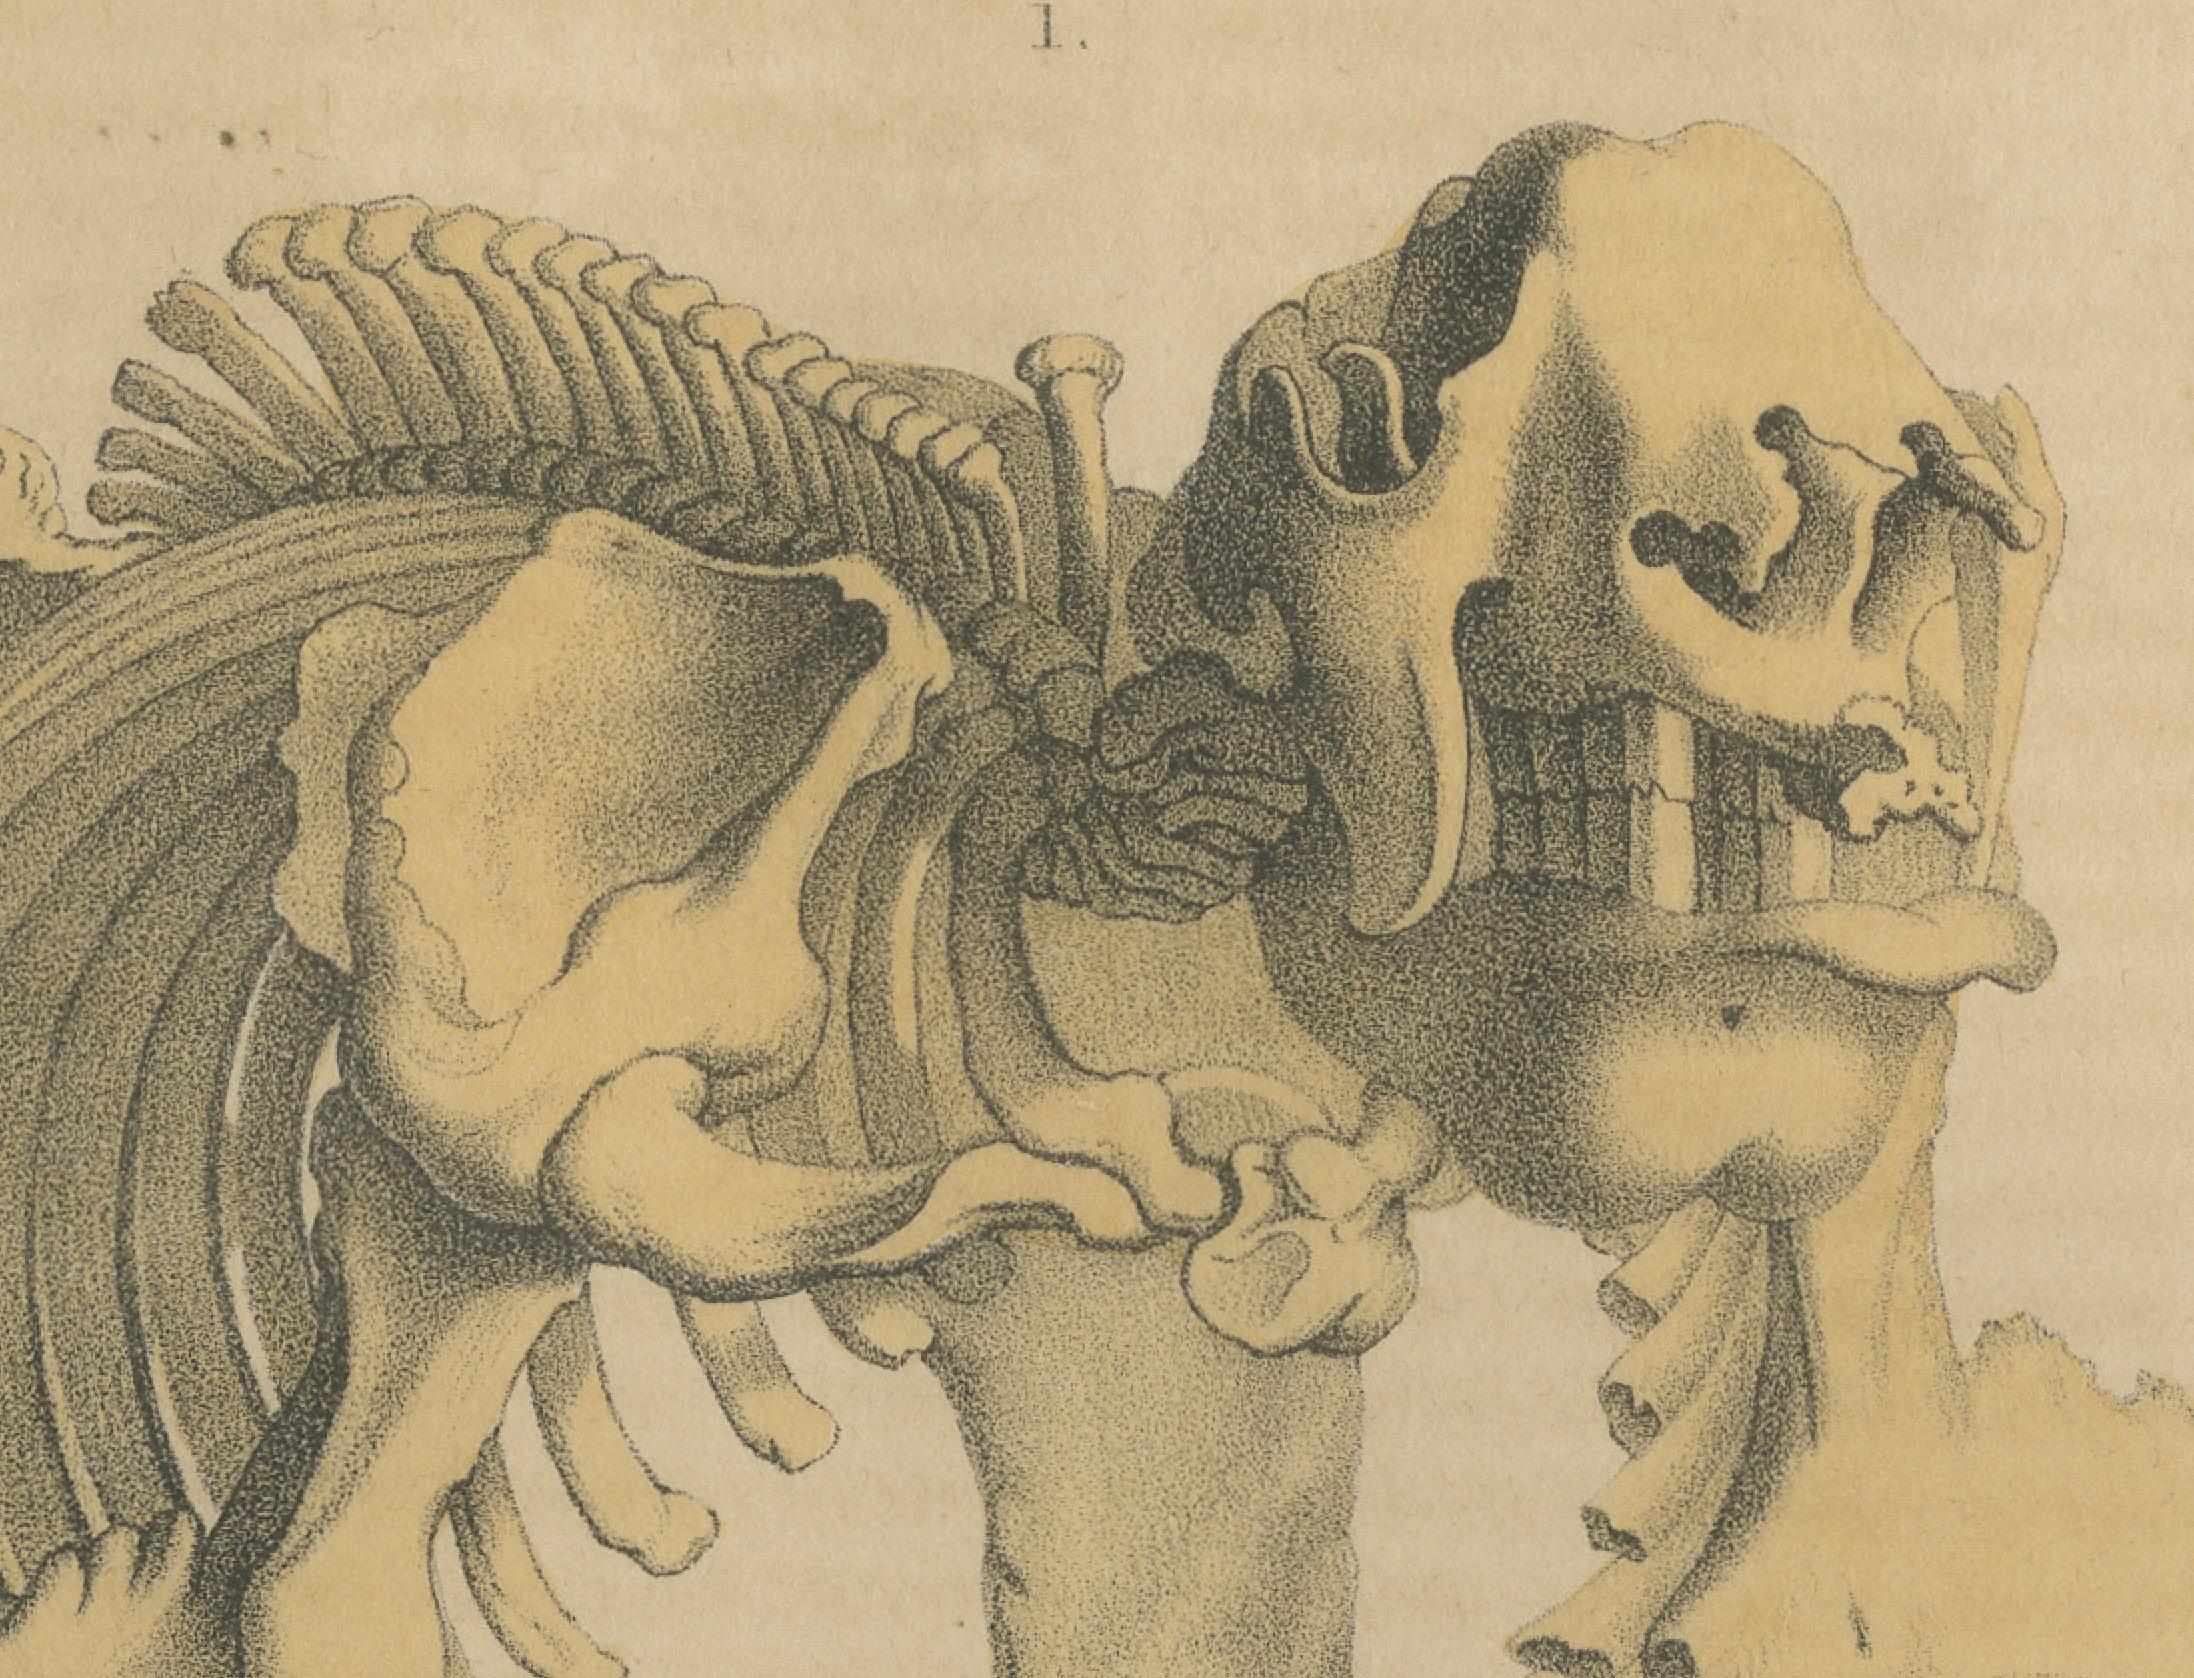 Engraved Original Engraving of The Skeletal Giant: Megatherium Anatomy, 1845 For Sale